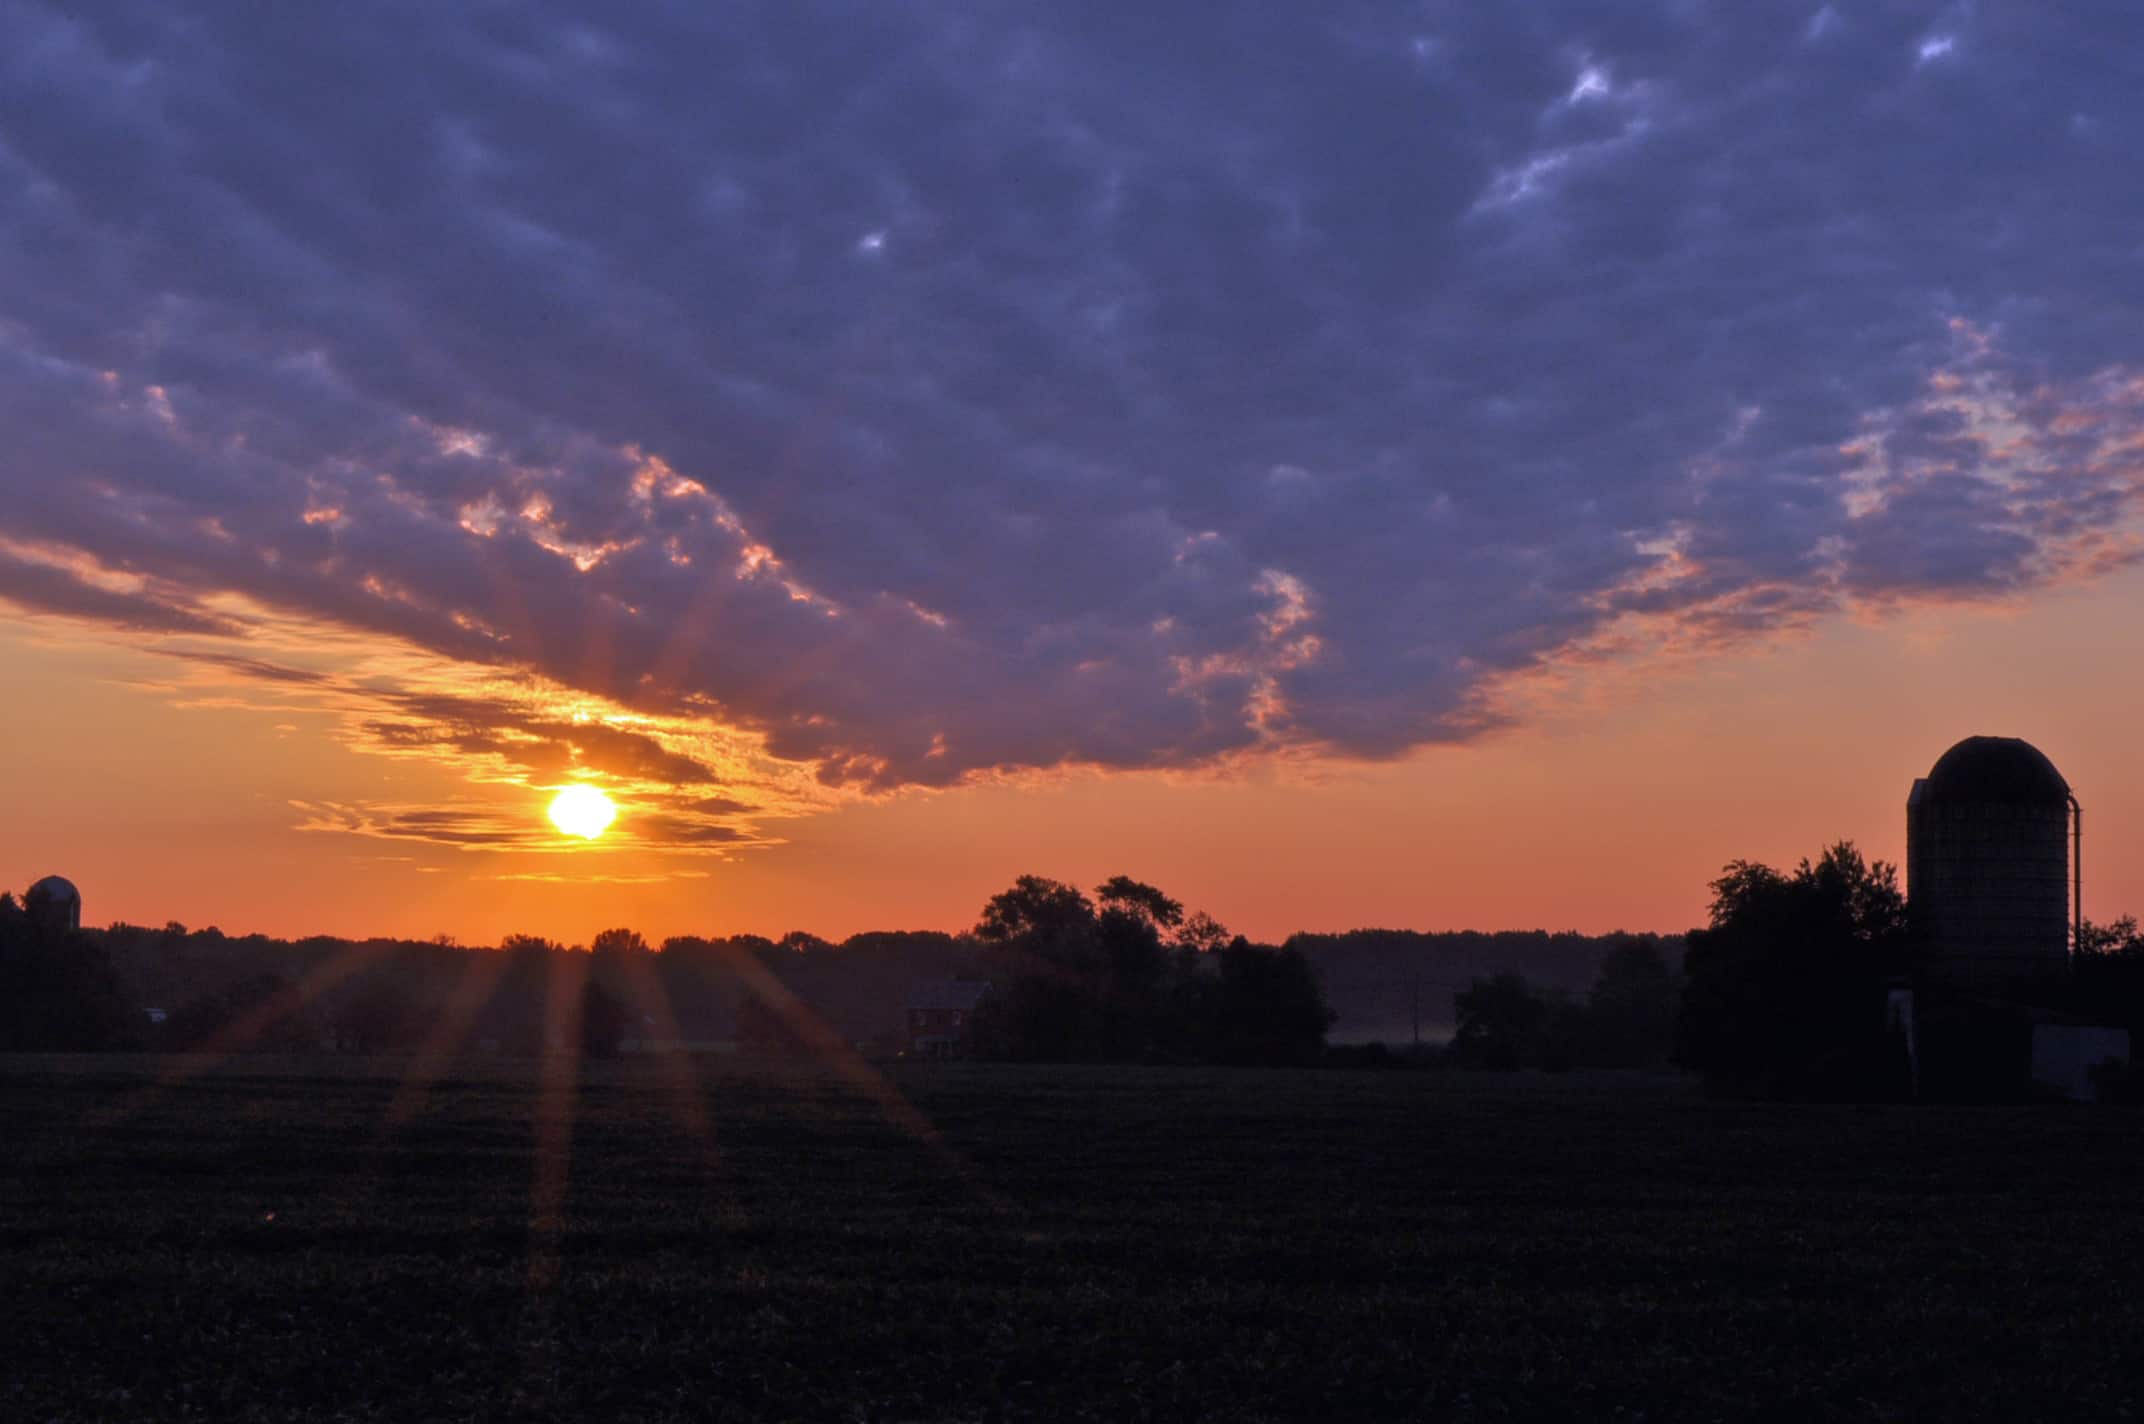 The sun rising over a Medford farm